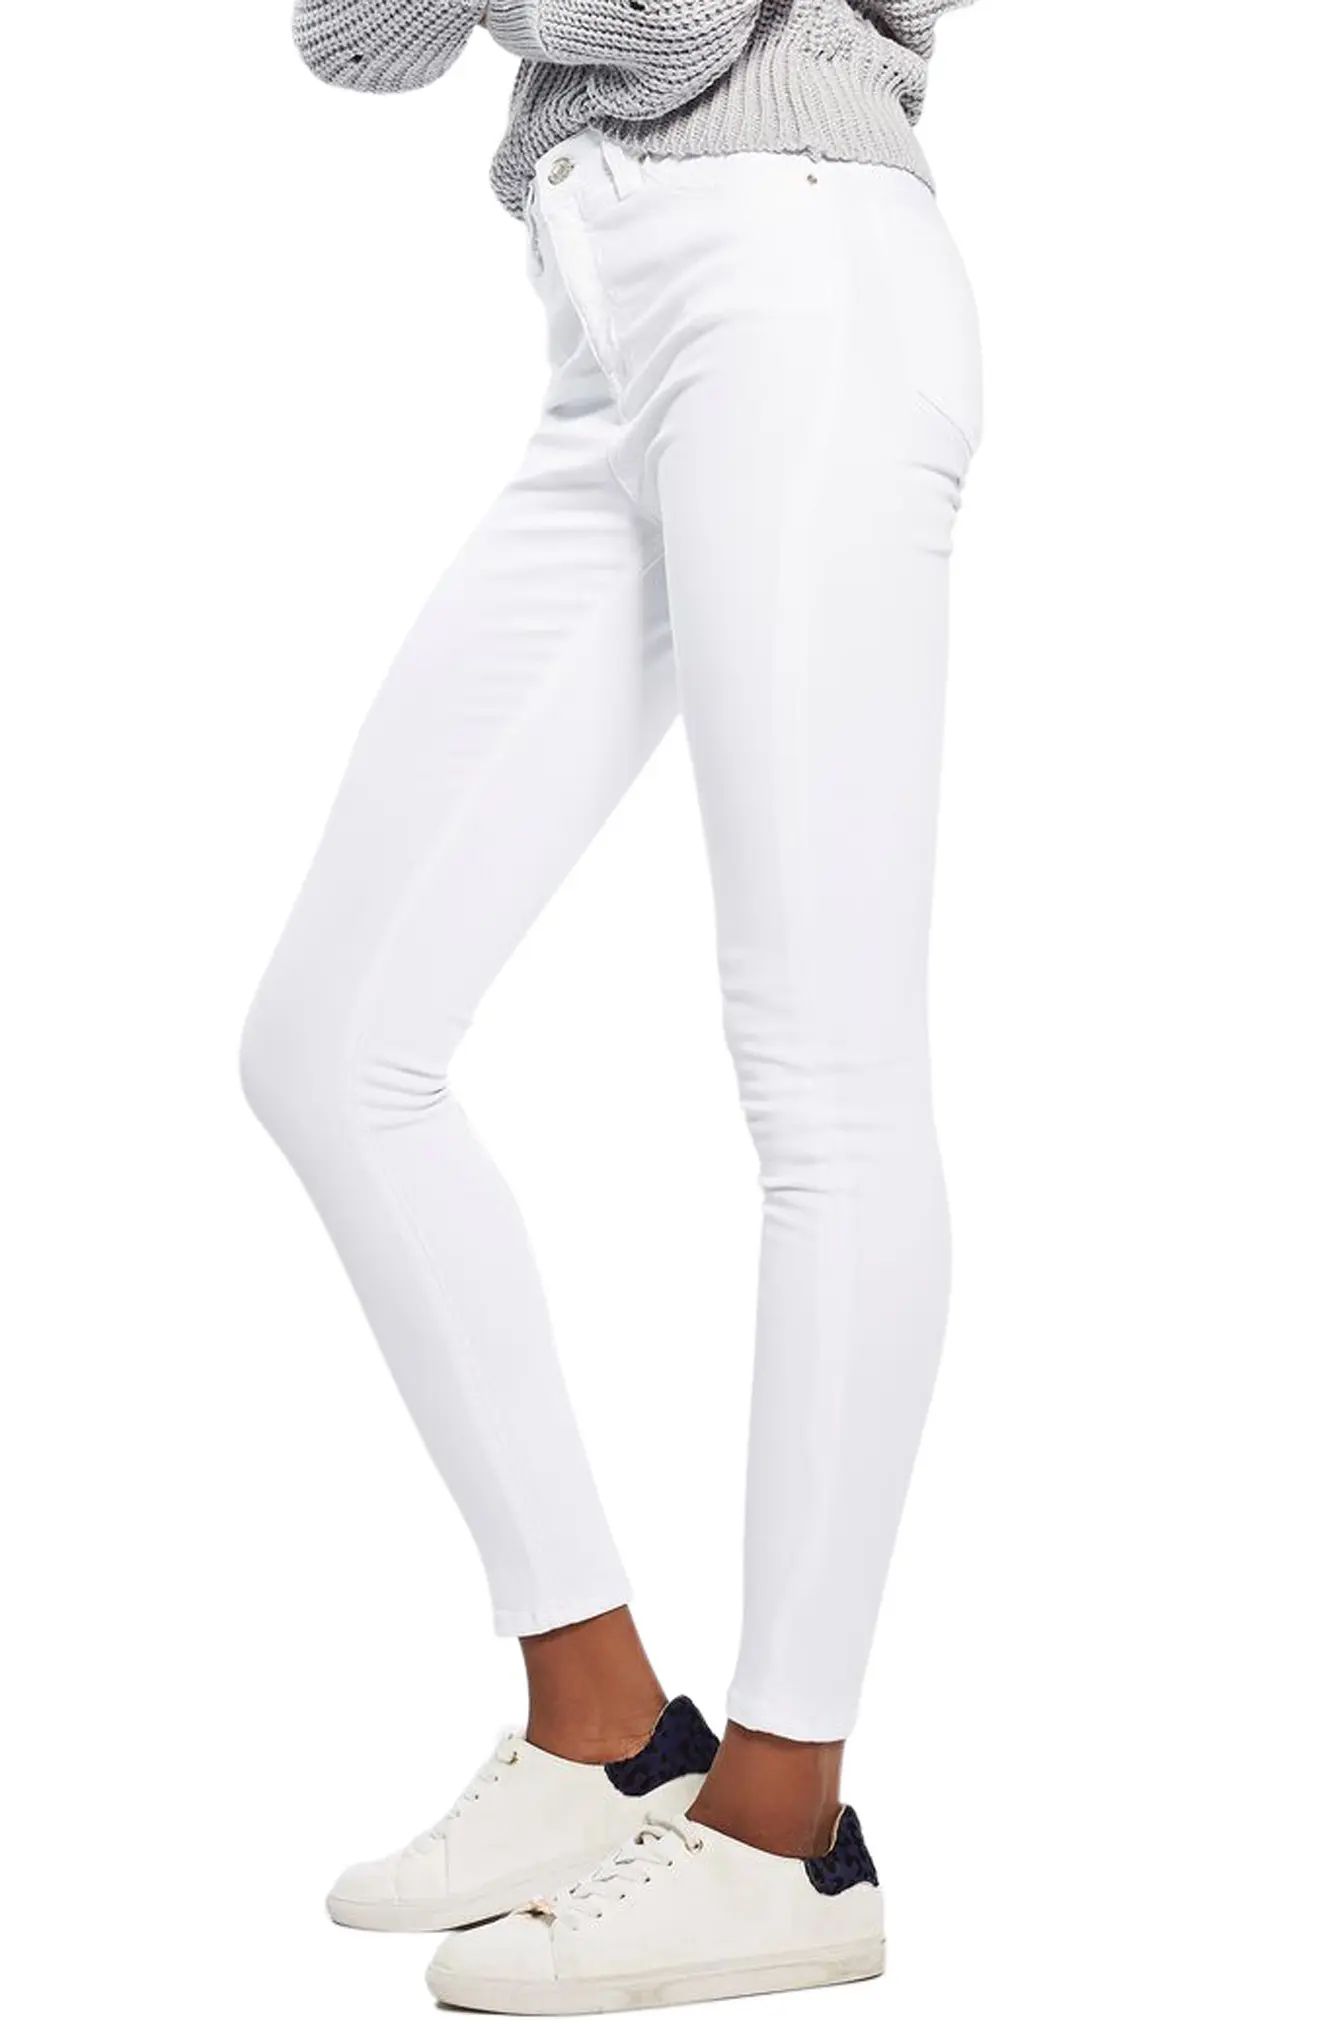 Women's Topshop Jamie High Waist Ankle Skinny Jeans, Size 34W x 32L (fits like 31-32W) - White | Nordstrom